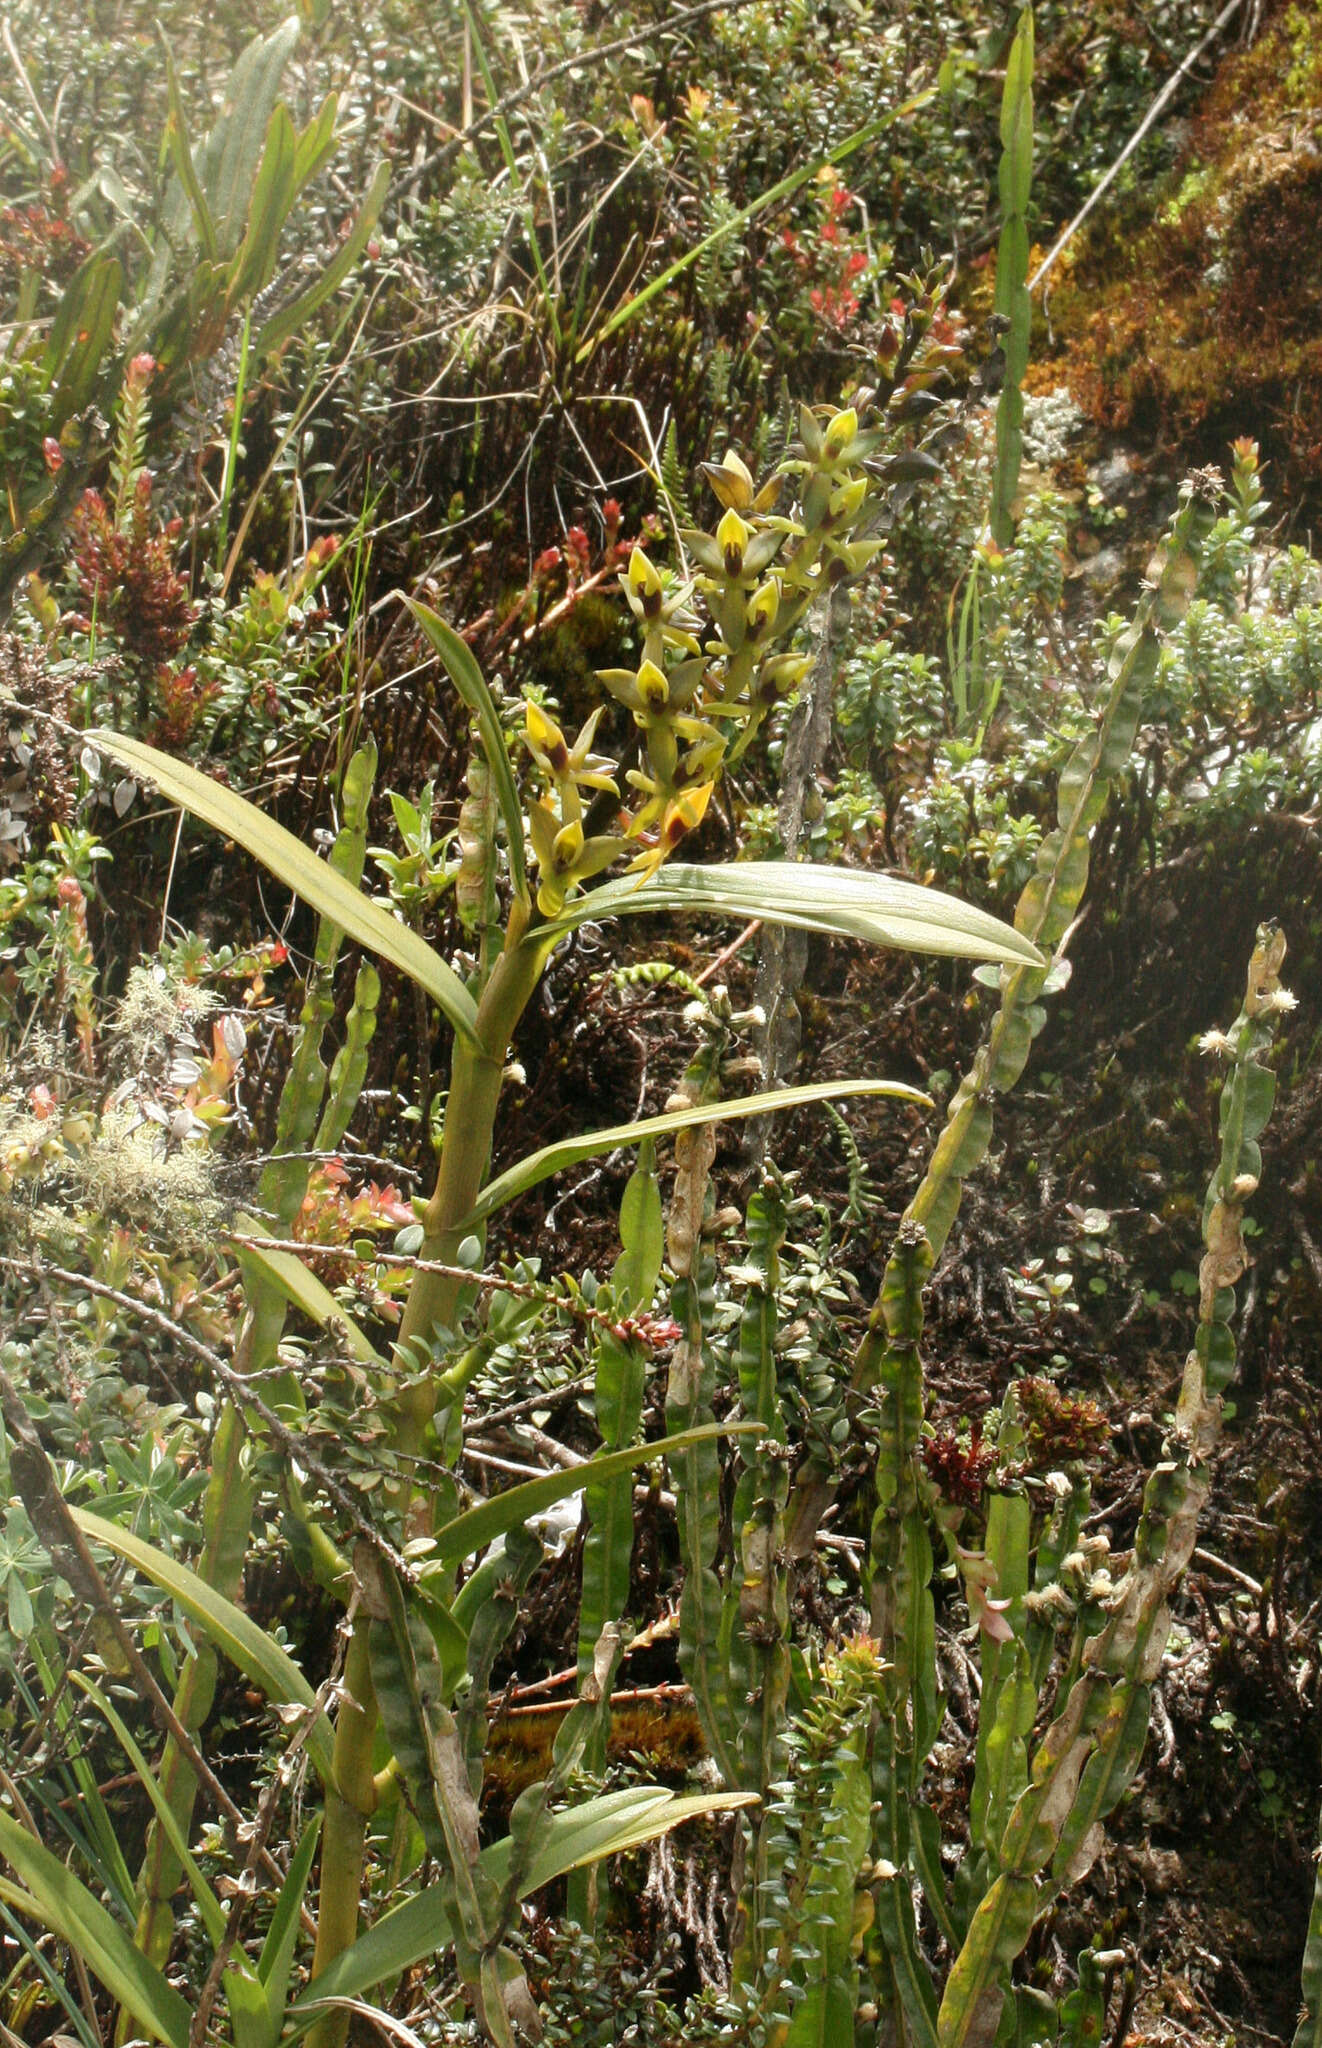 Image of Epidendrum oxycalyx Hágsater & Dodson